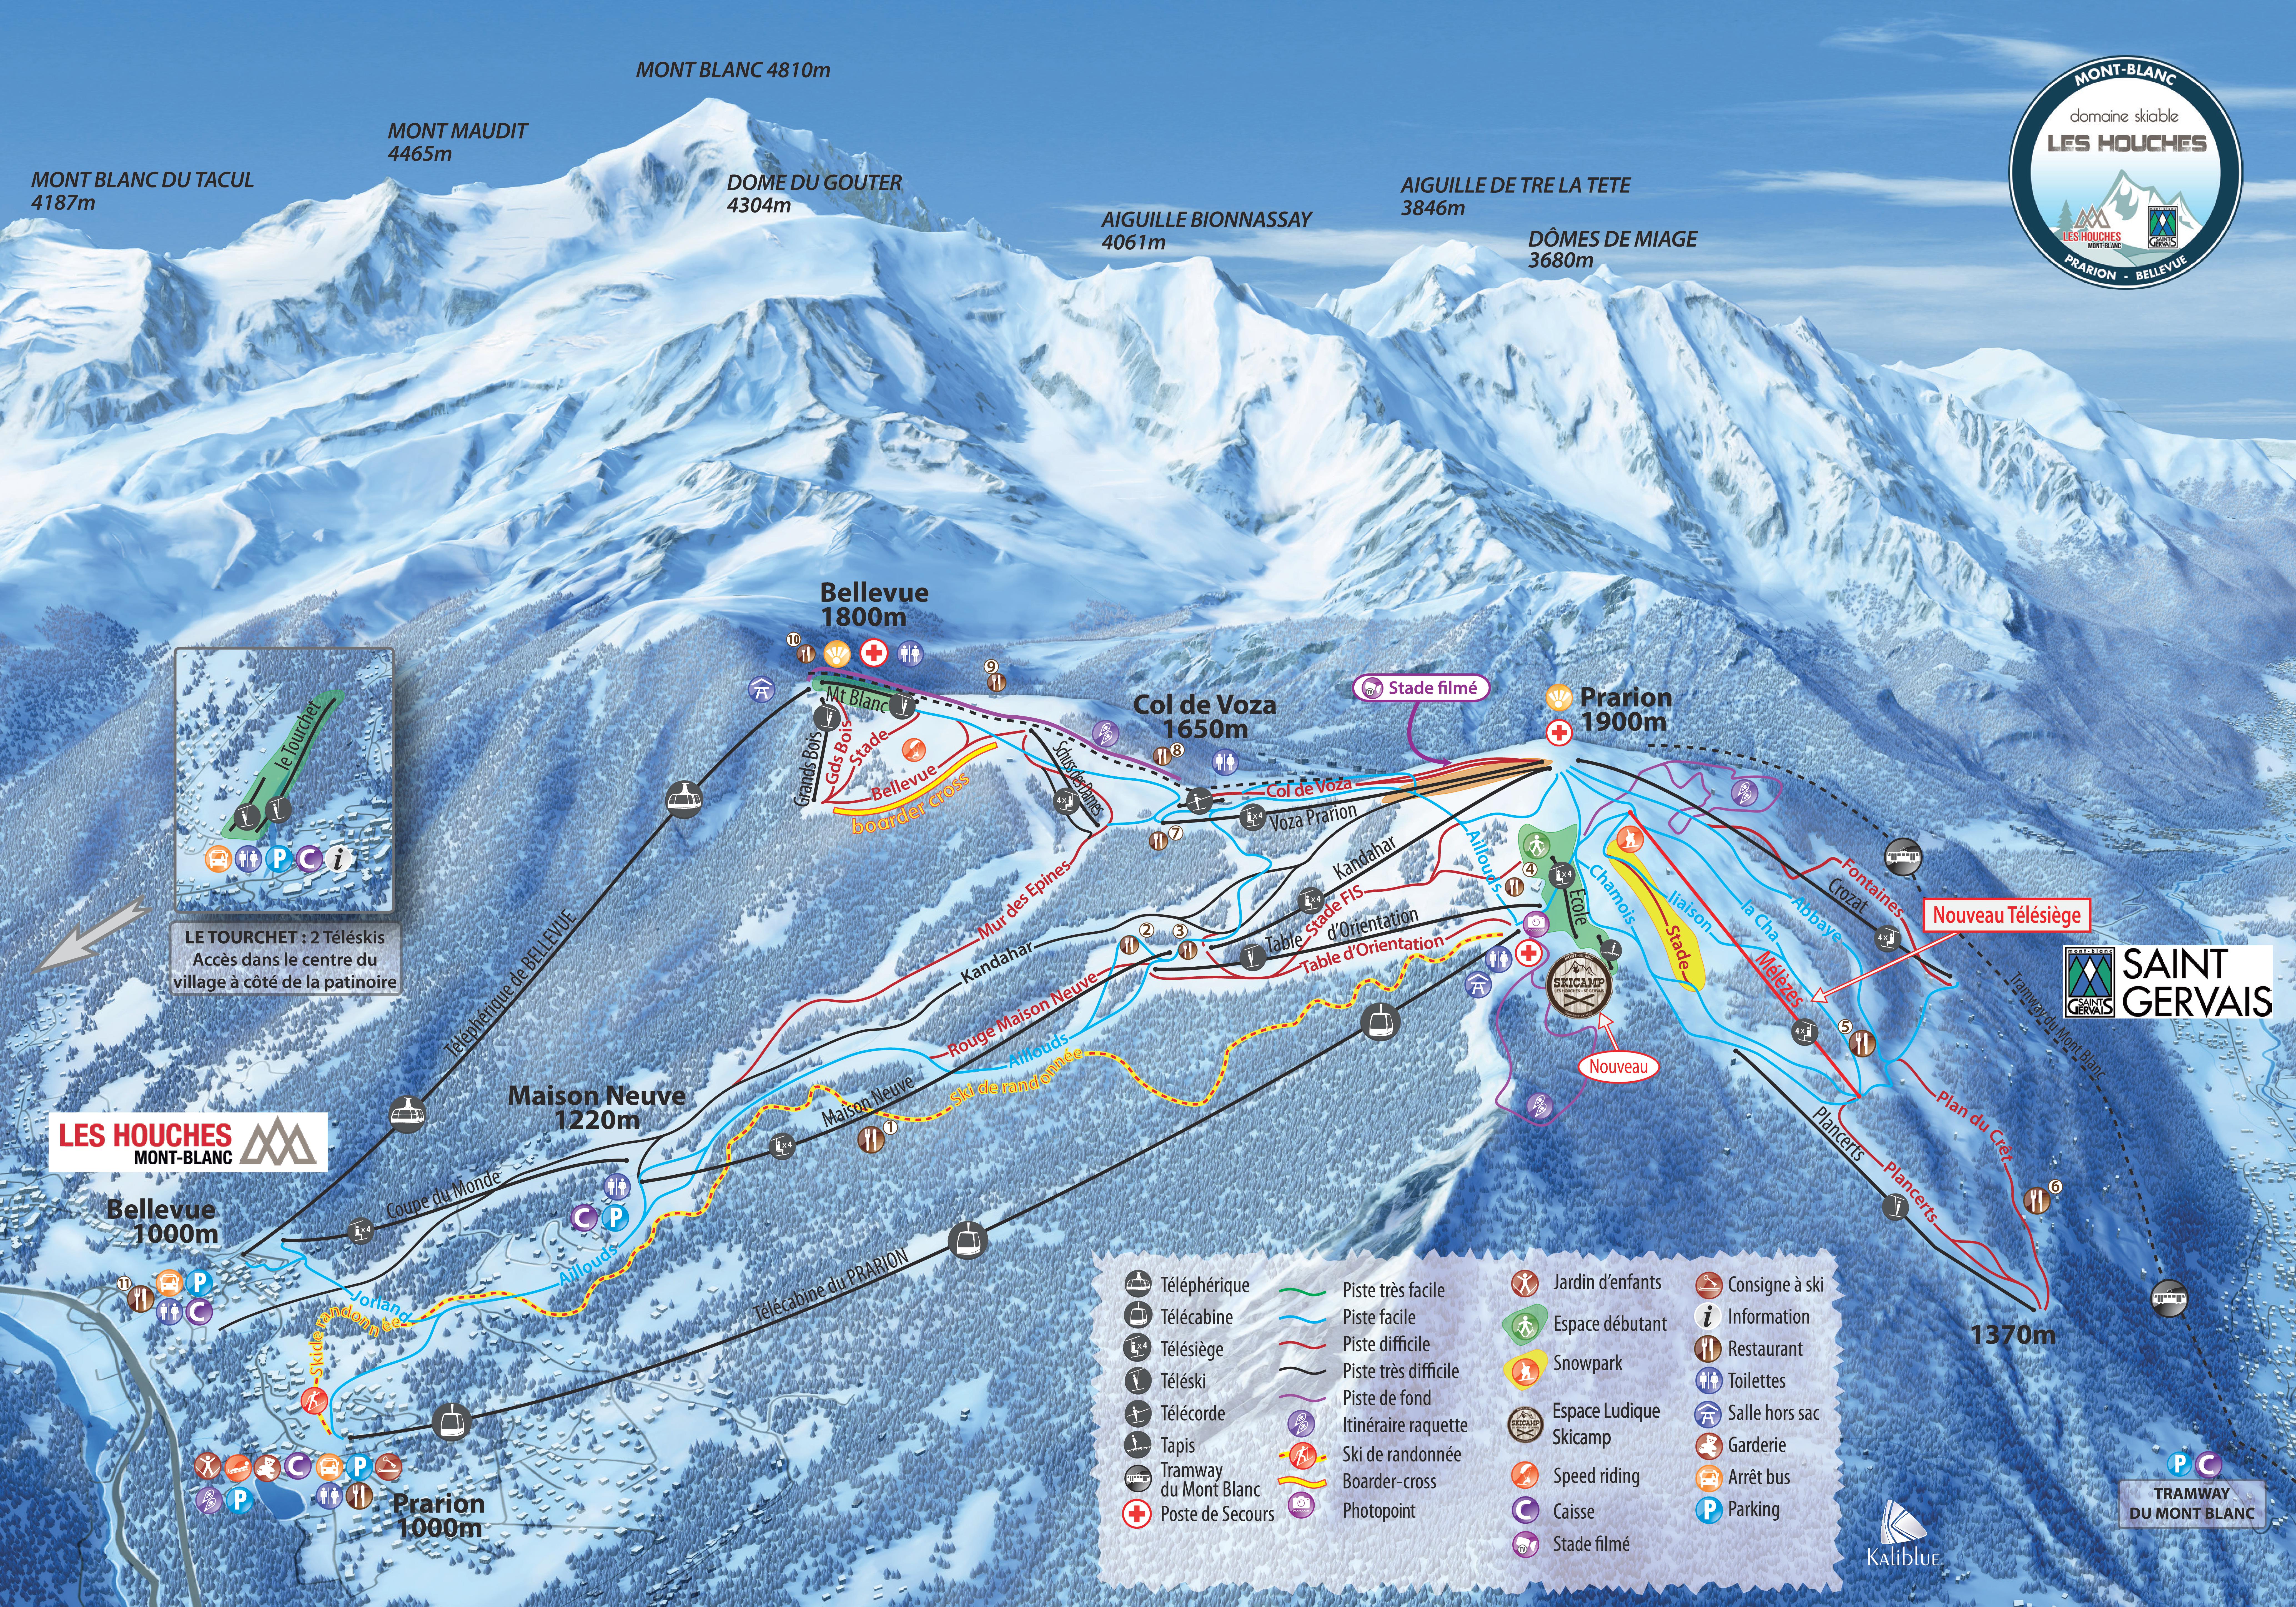 Les houches ski area for 2015/2016 season.